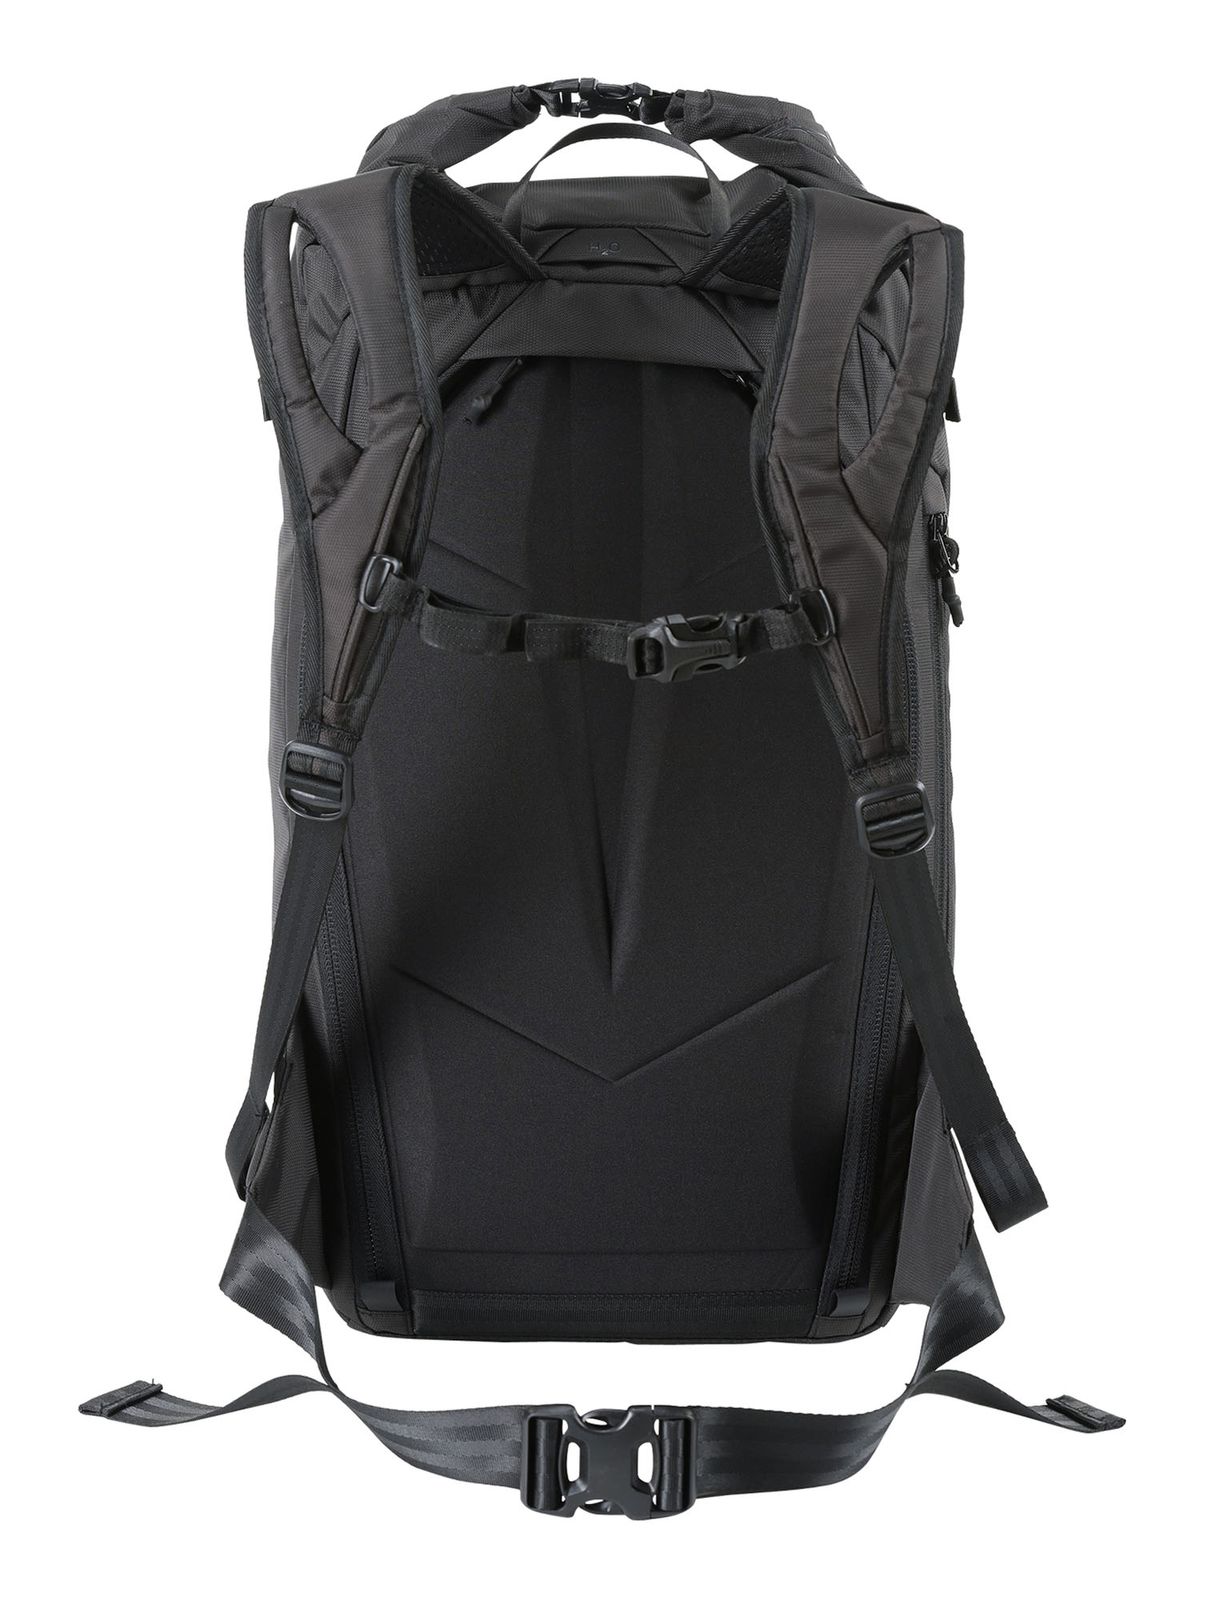 NITRO Splitpack 30 Phantom | Buy bags, purses & accessories online ...